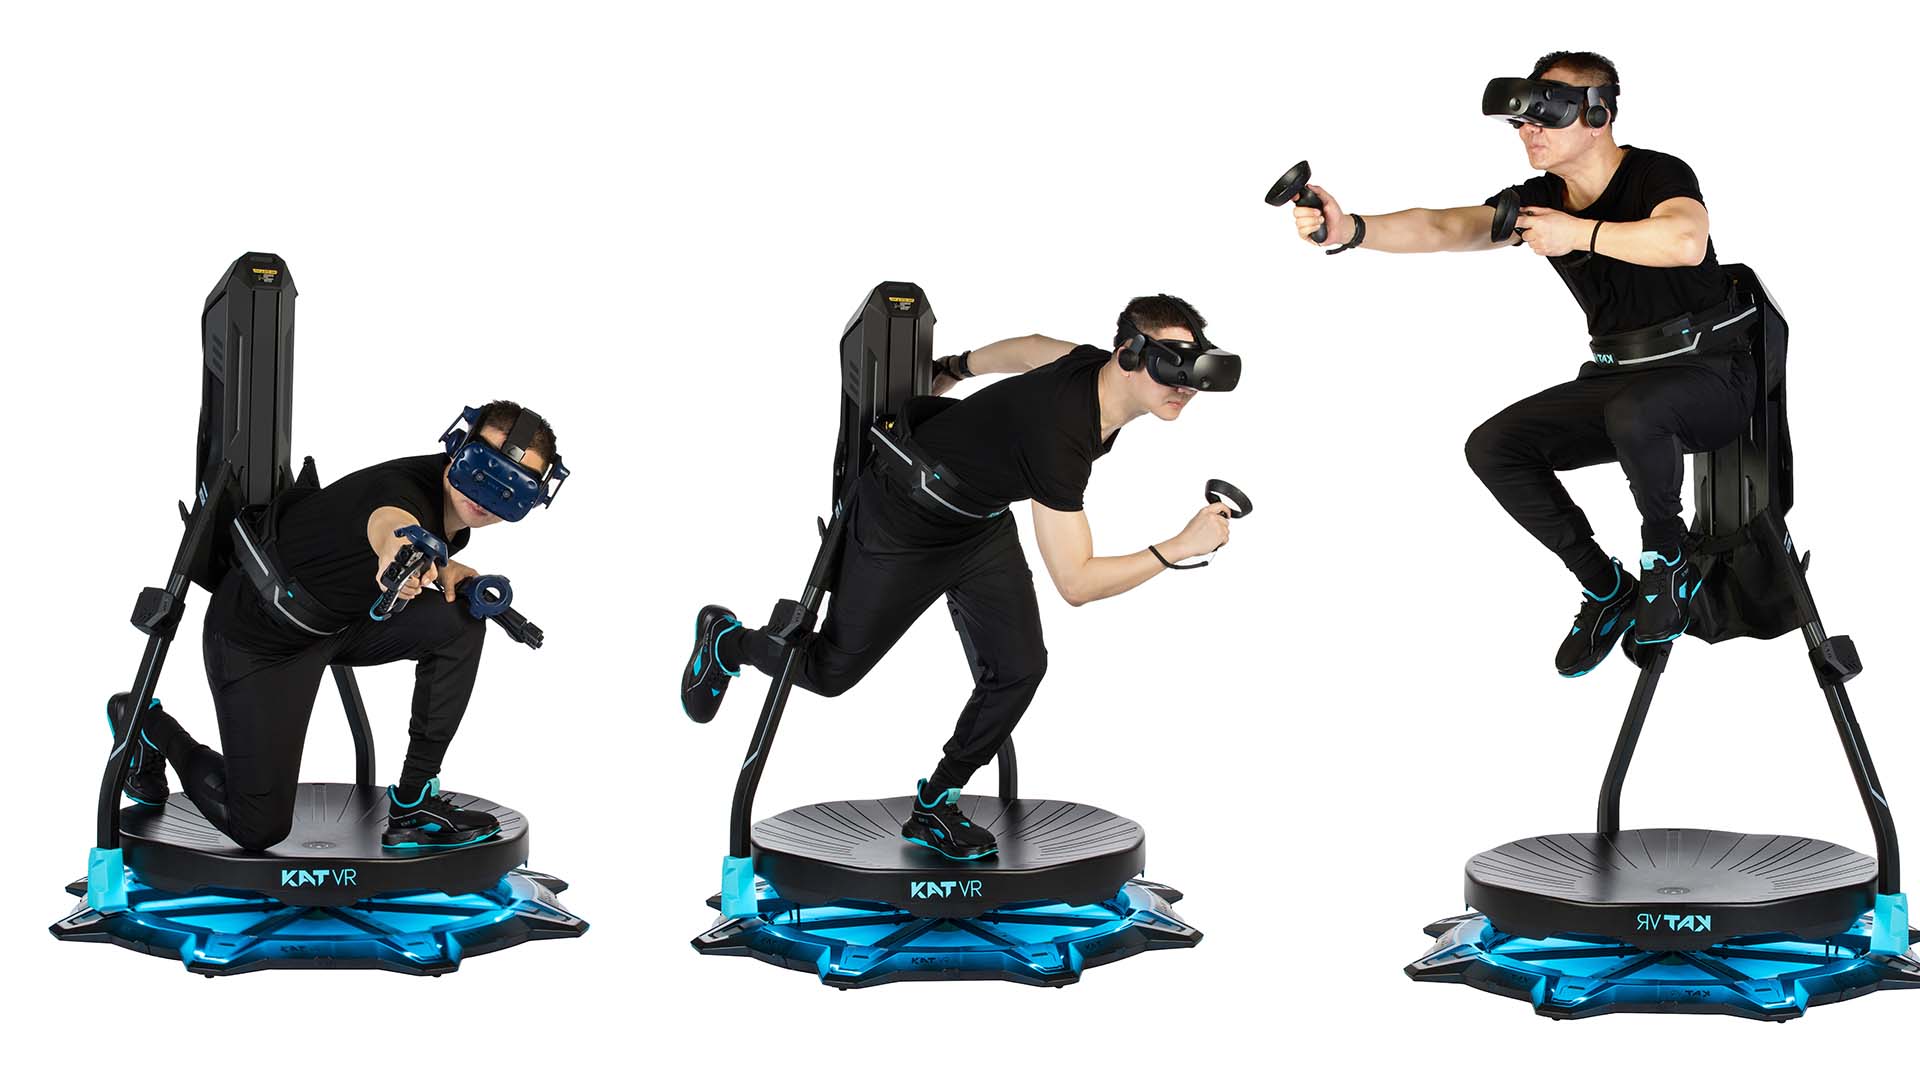 Kat Walk VR Treadmill Returns With New $1,000 Model On Kickstarter